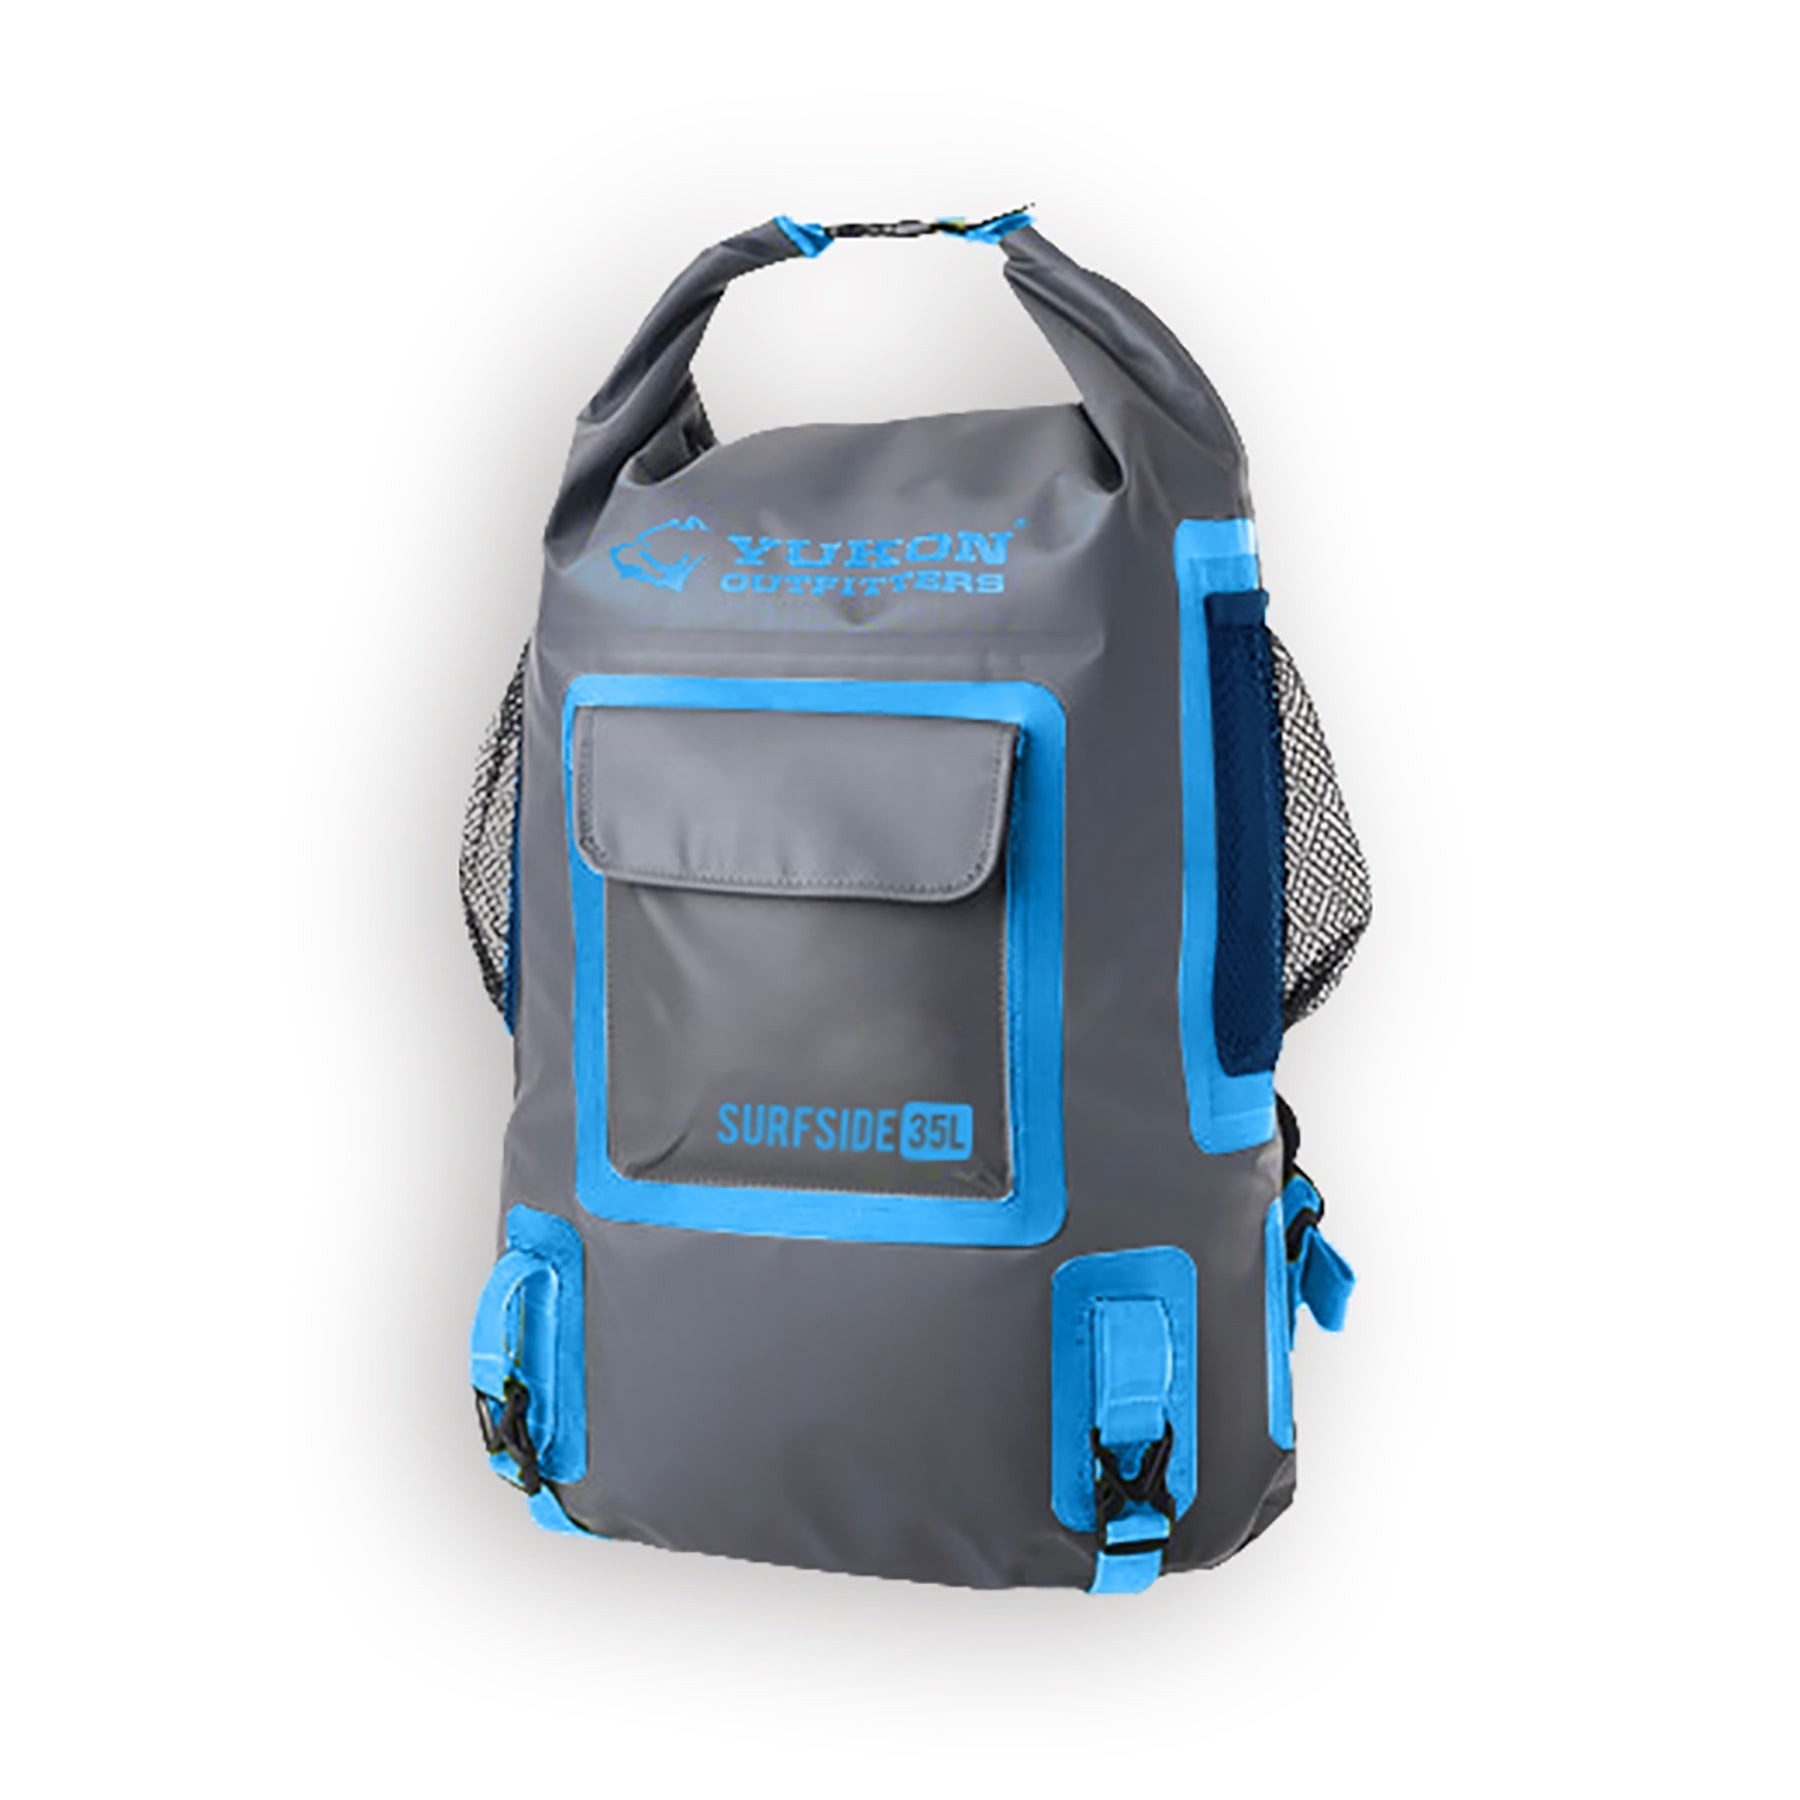 Surfside Dry Bag Slate Gray/Electric Blue